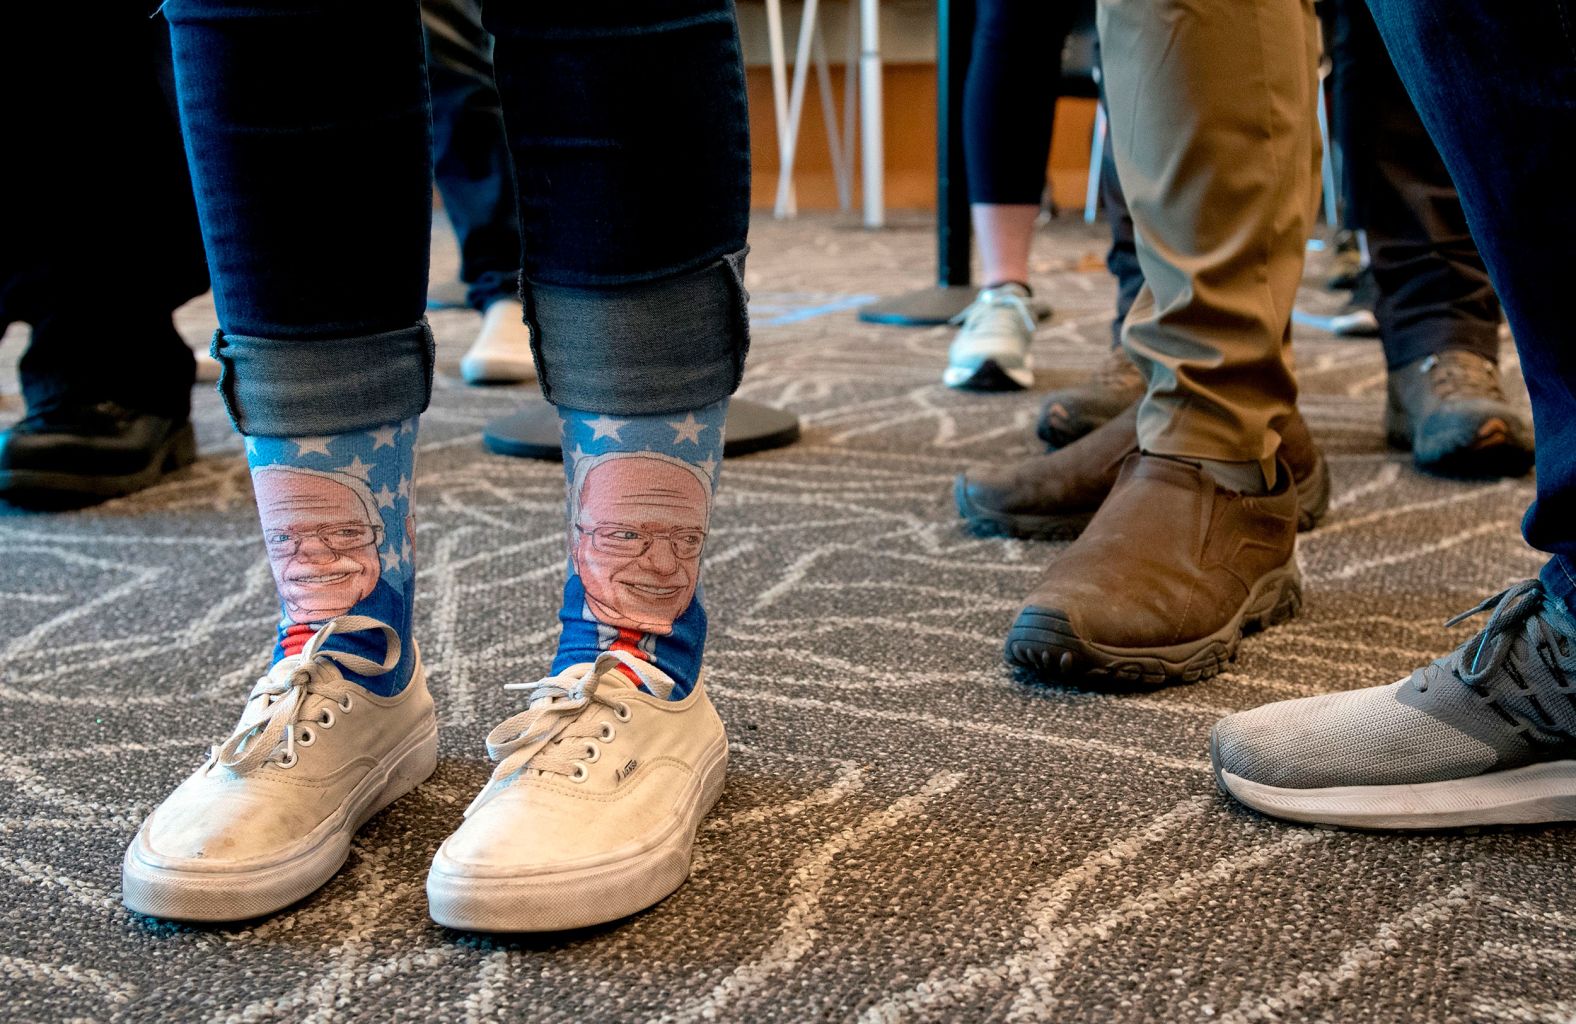 Sanders is seen on a voter's socks in Denver.